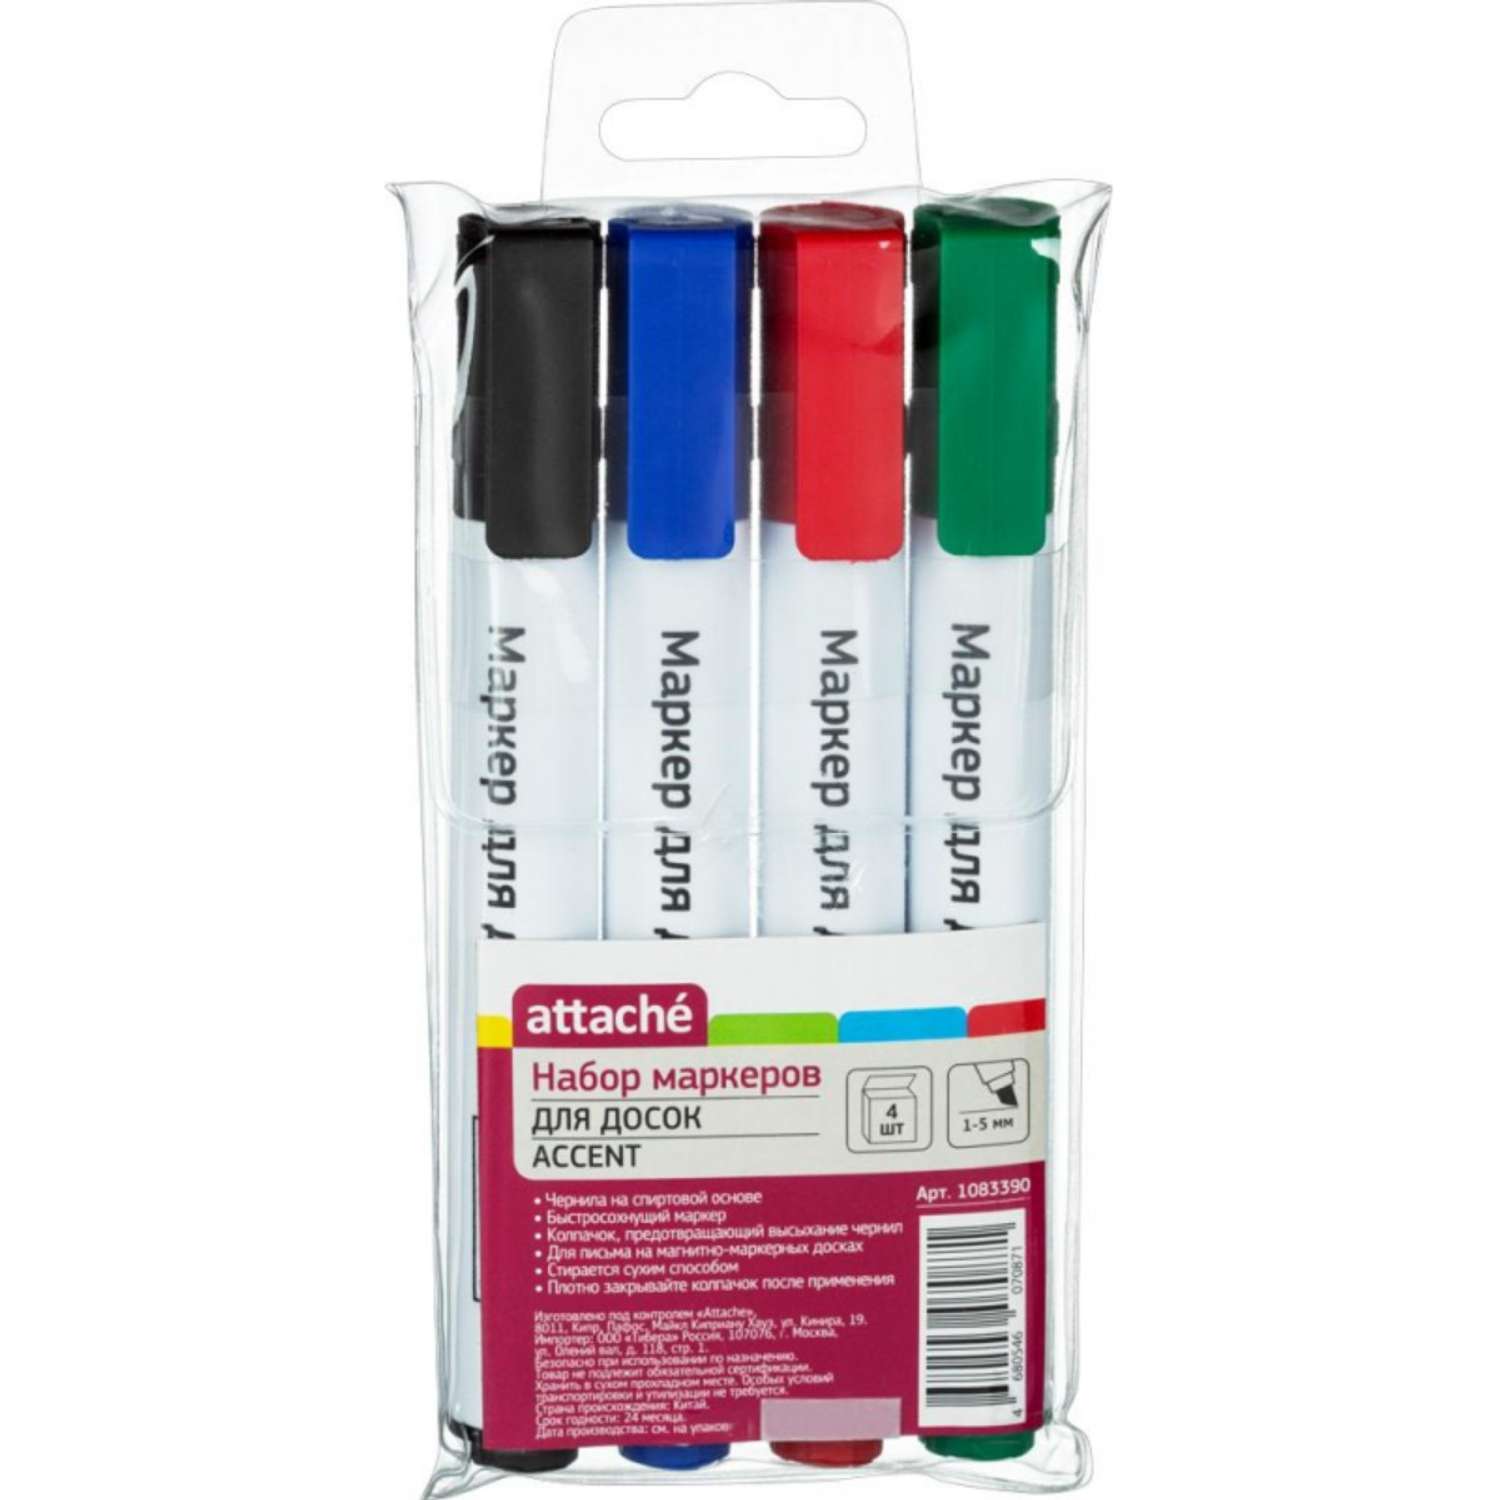 Маркер для досок Attache Accent 4 цвета со скошенным након 1-5мм 3 упаковки по 4 цвета - фото 2